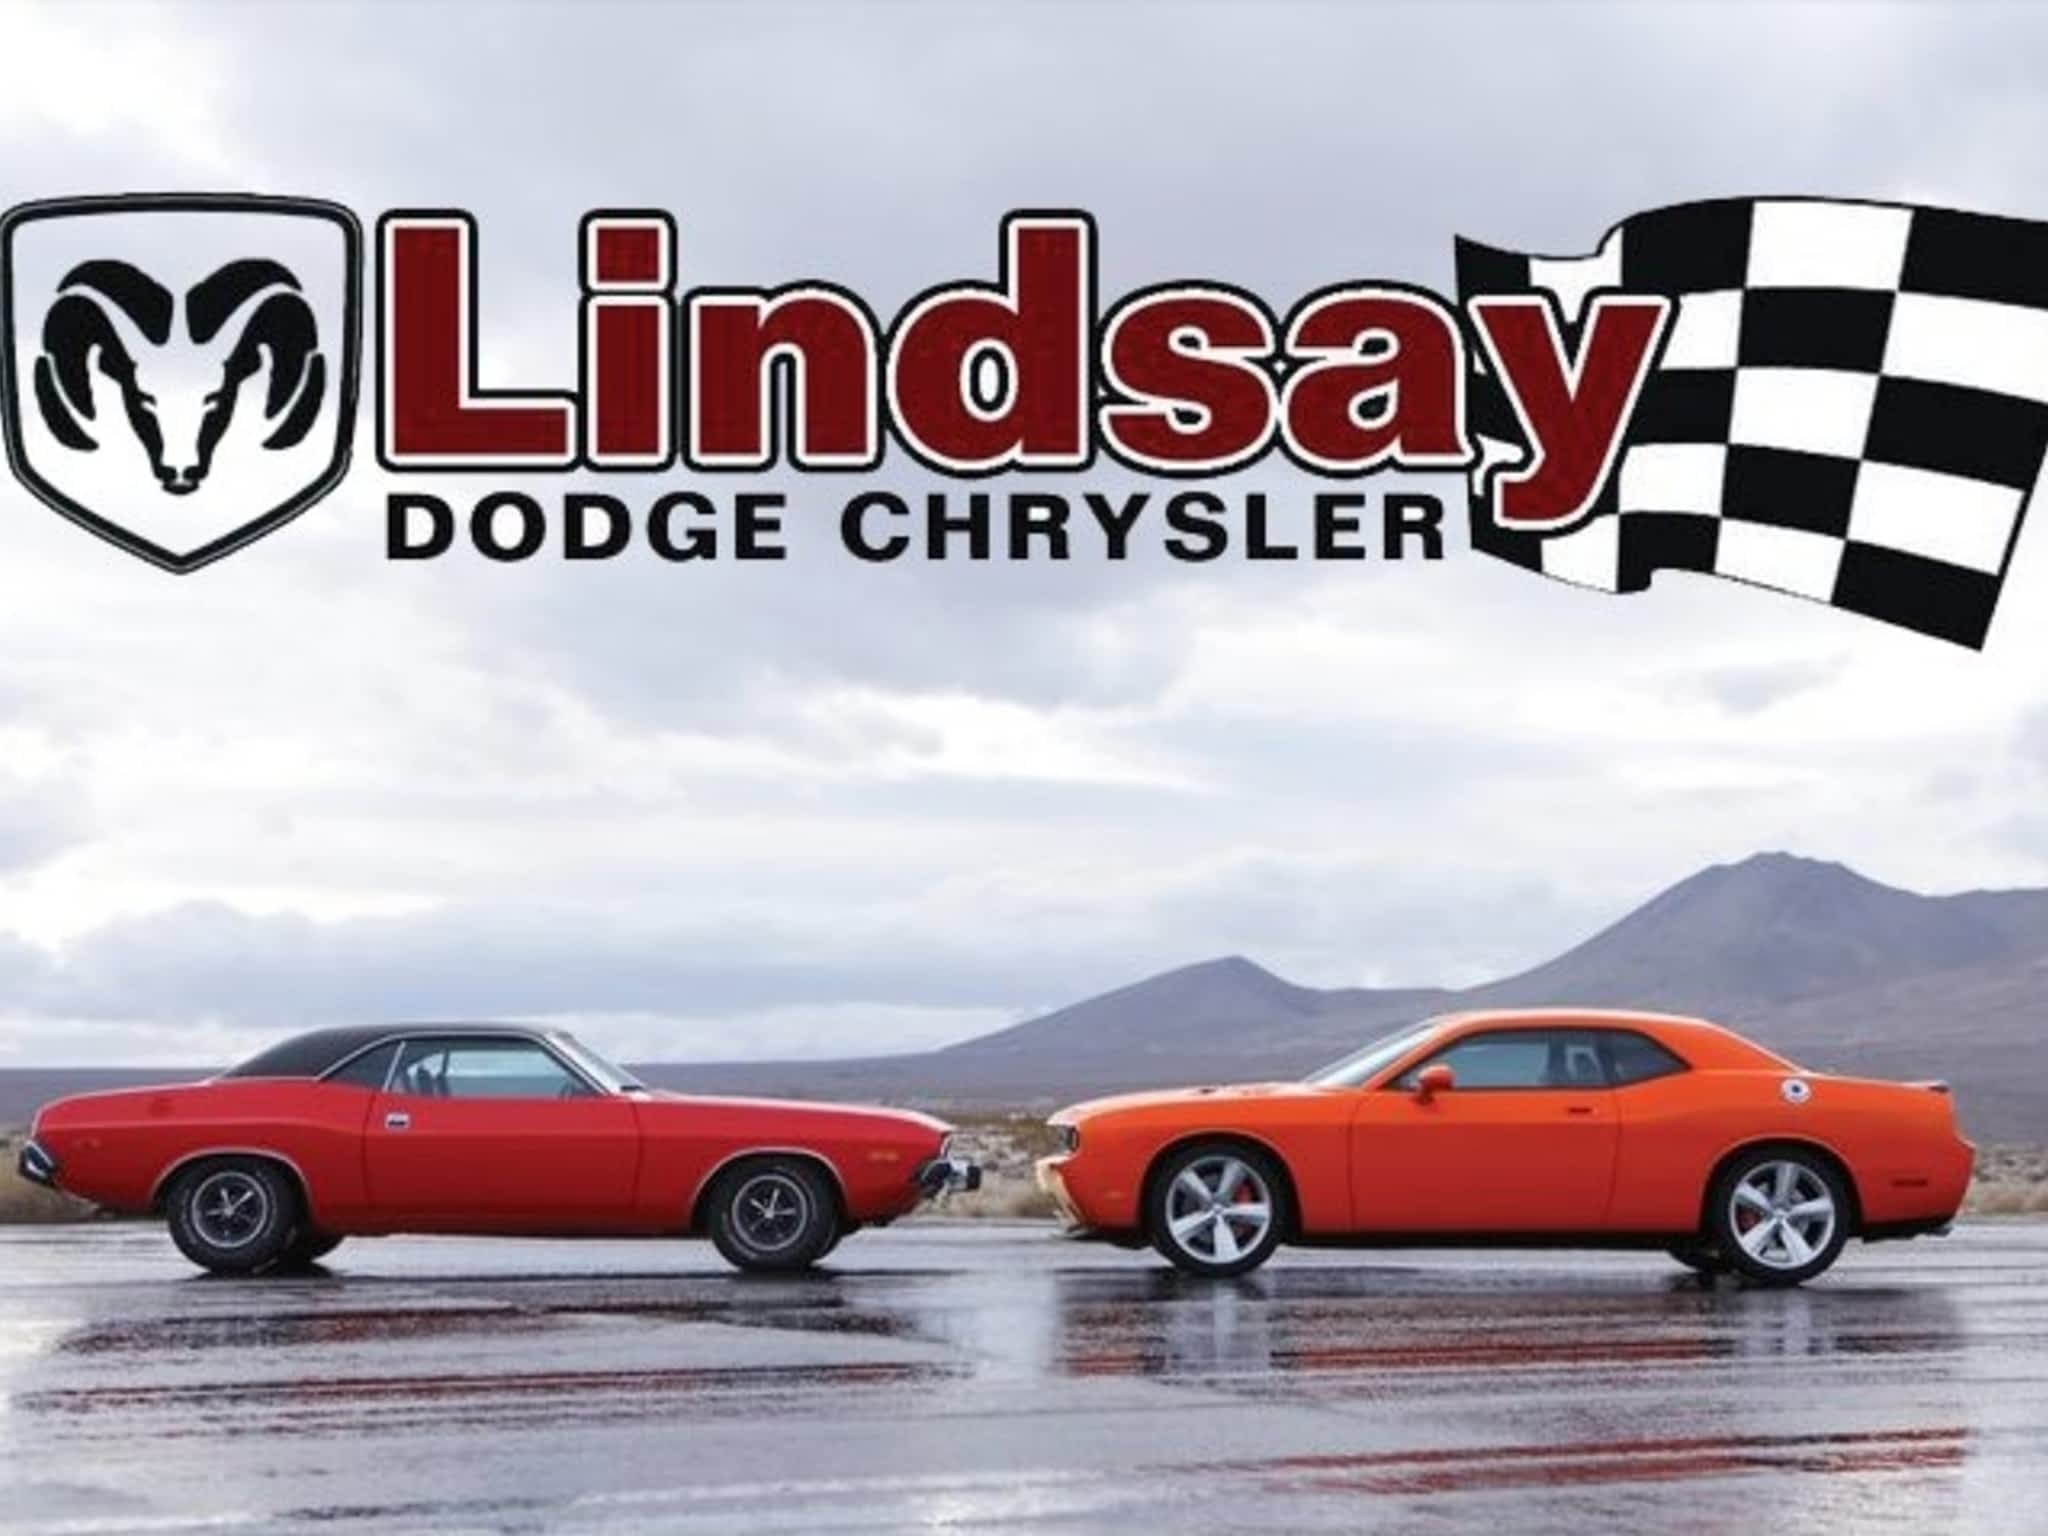 photo Lindsay Dodge Chrysler LTD